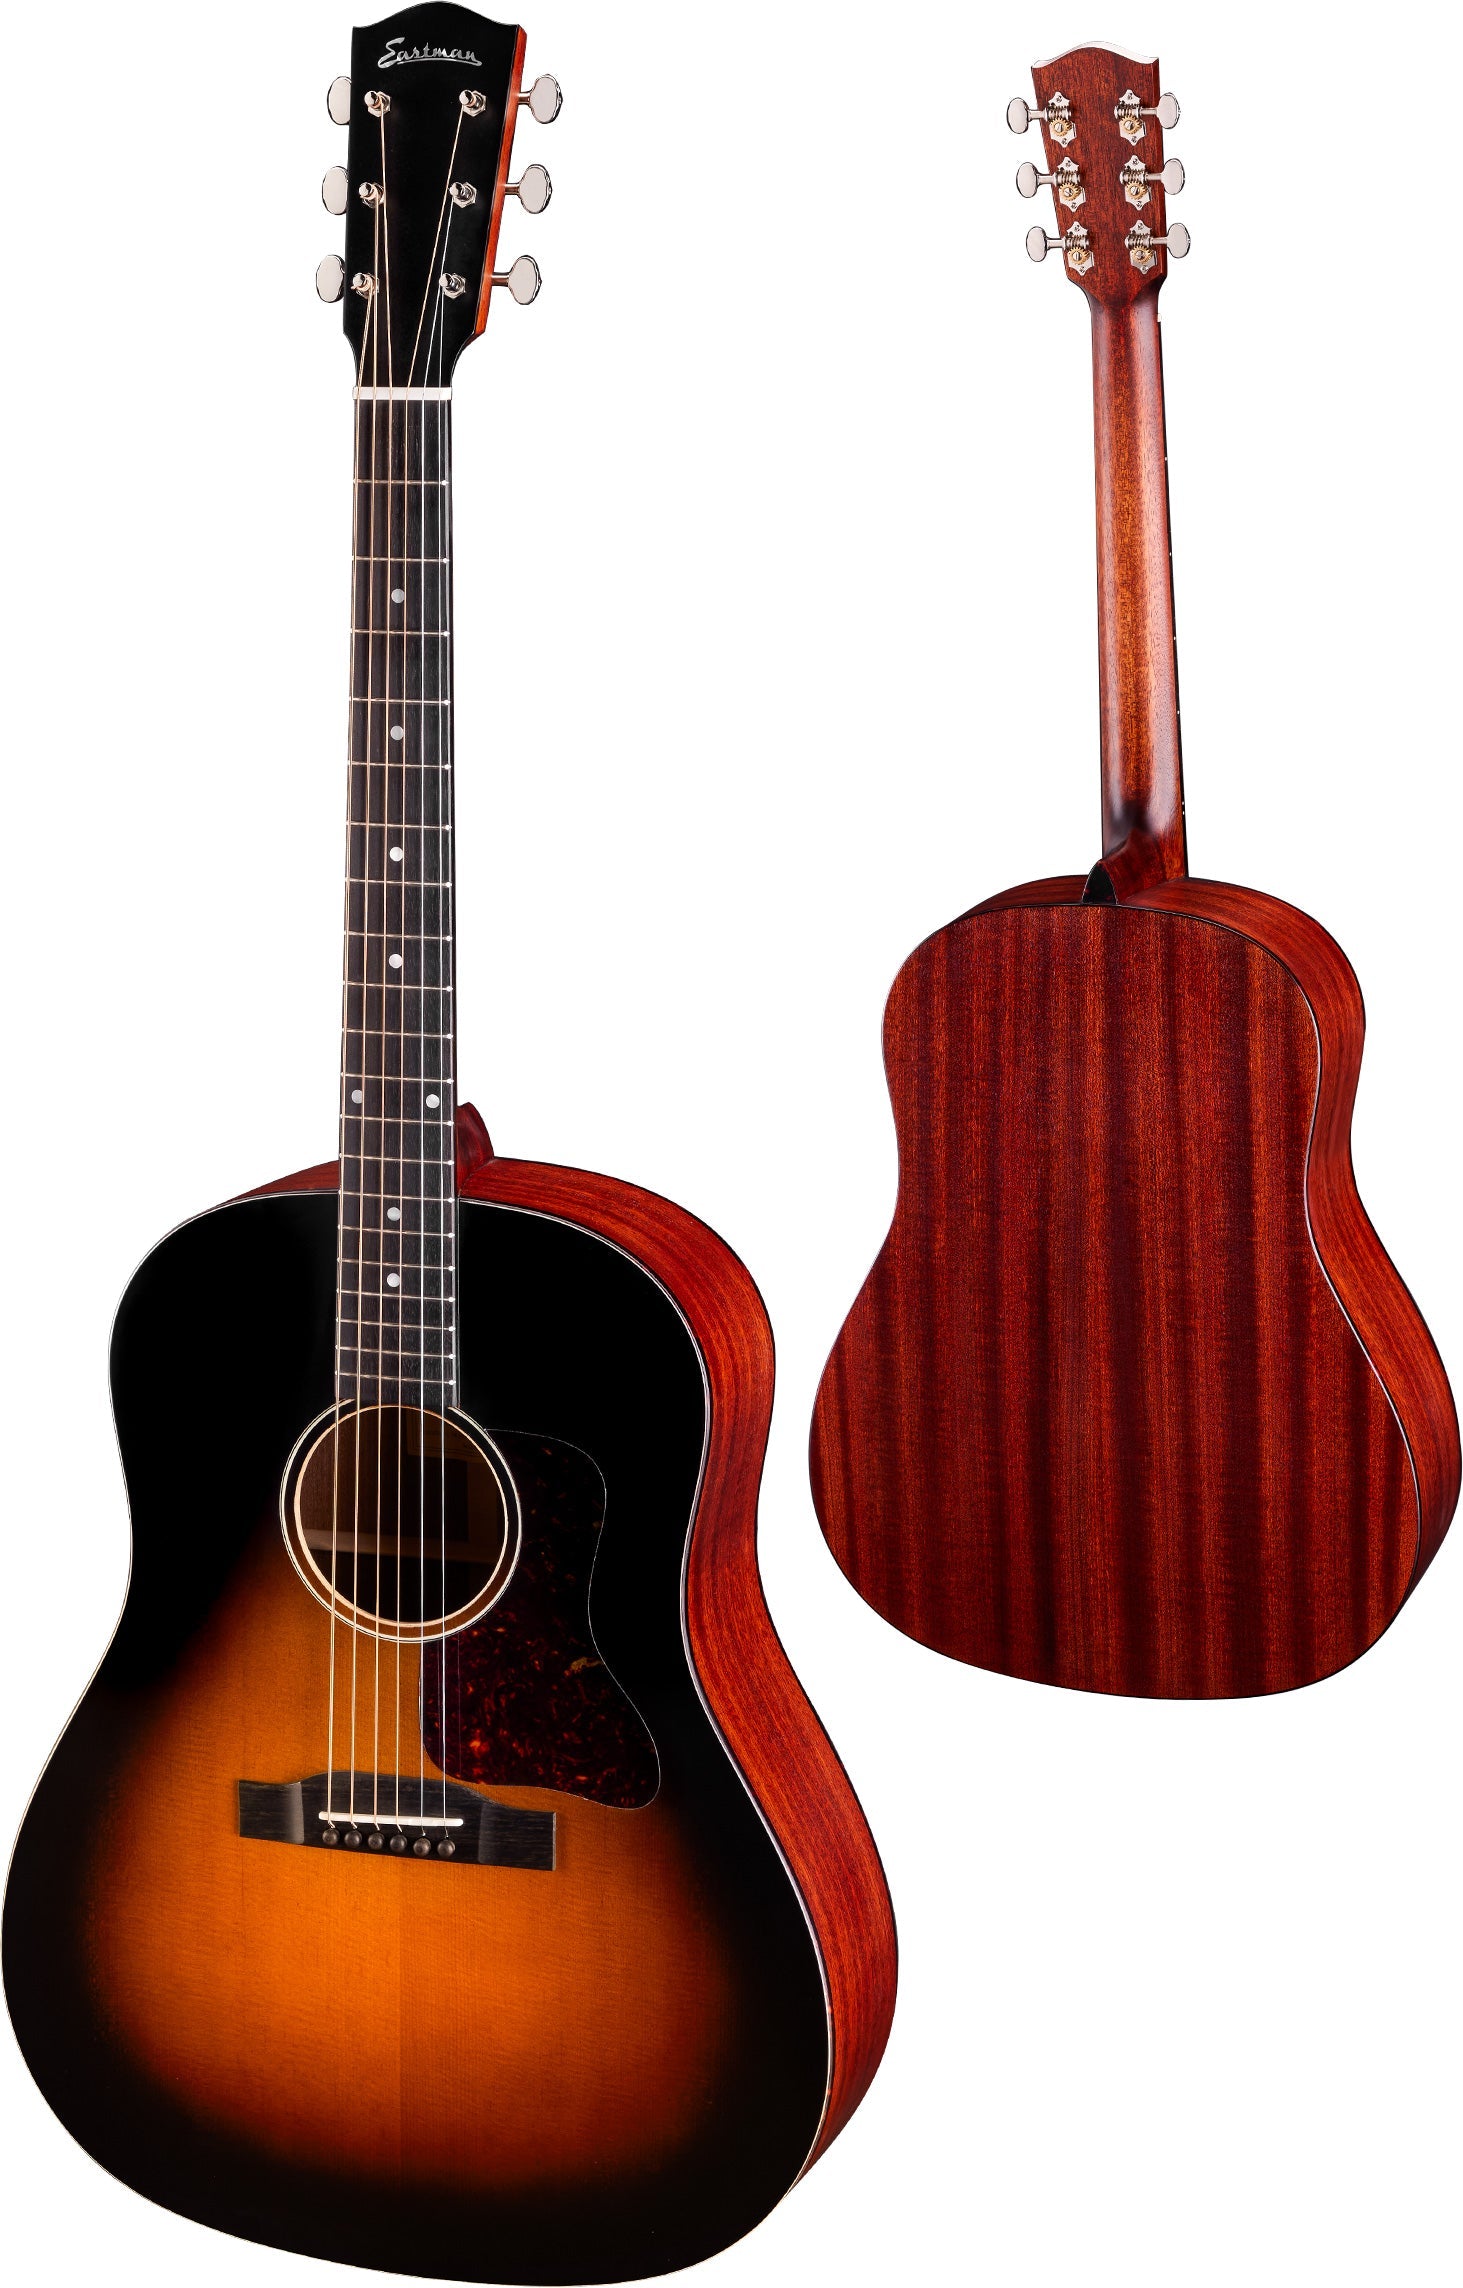 Eastman E1SS-SB, Sunburst, Acoustic Guitar, Acoustic Guitar for sale at Richards Guitars.